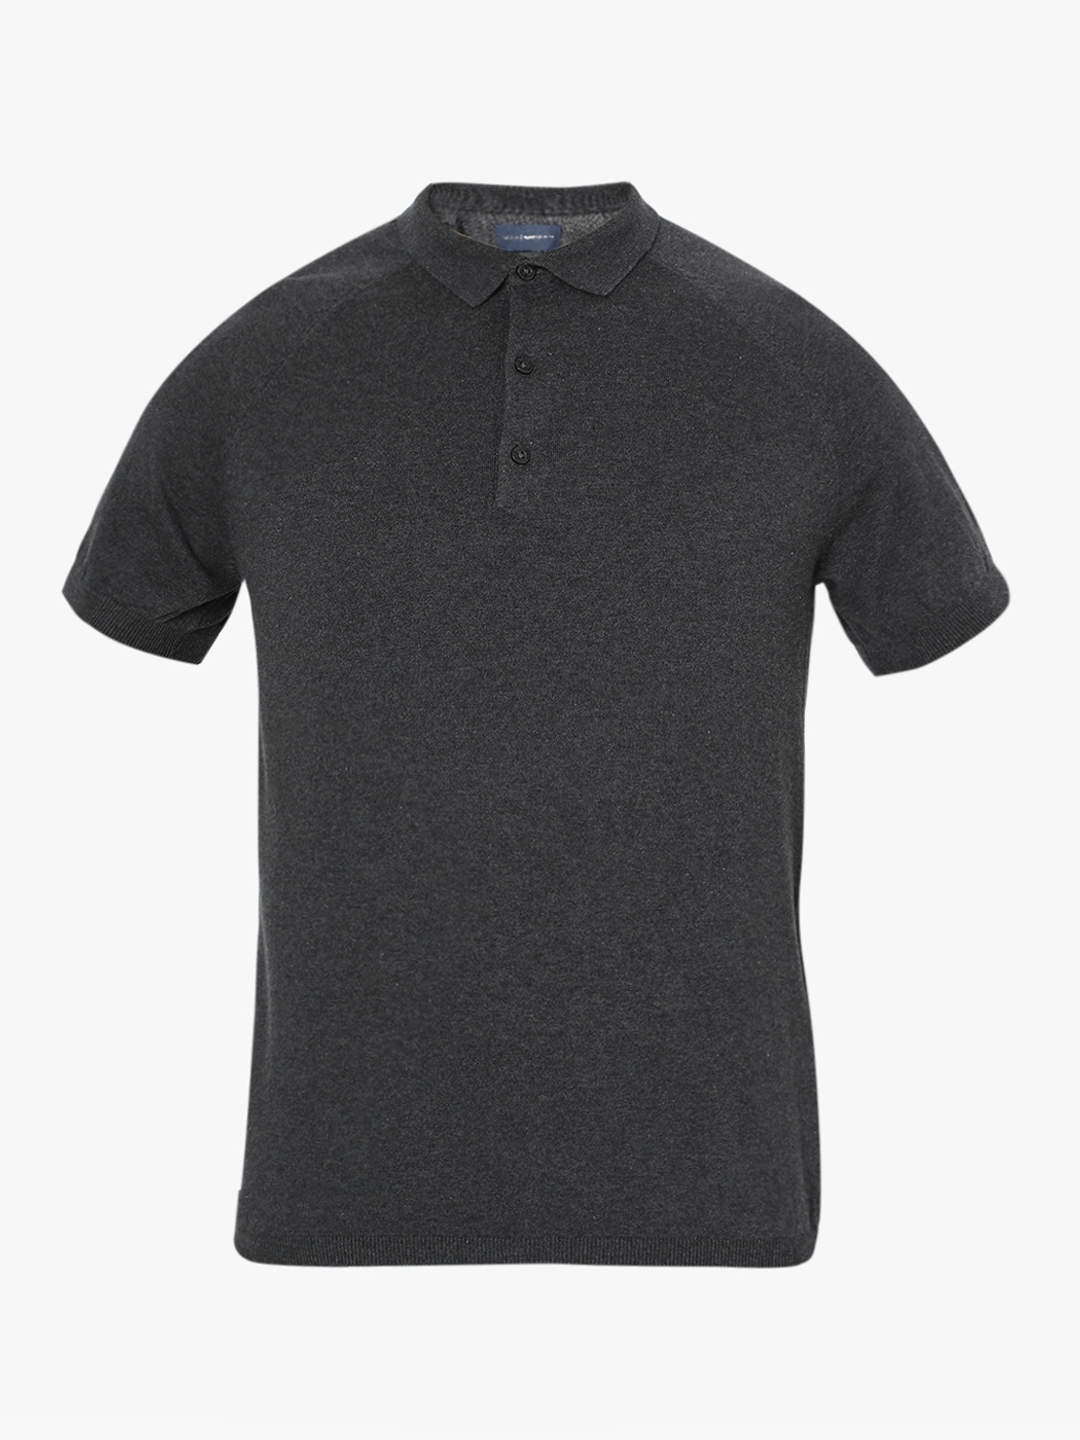 Heathered Polo T-shirt with raglan Sleeves